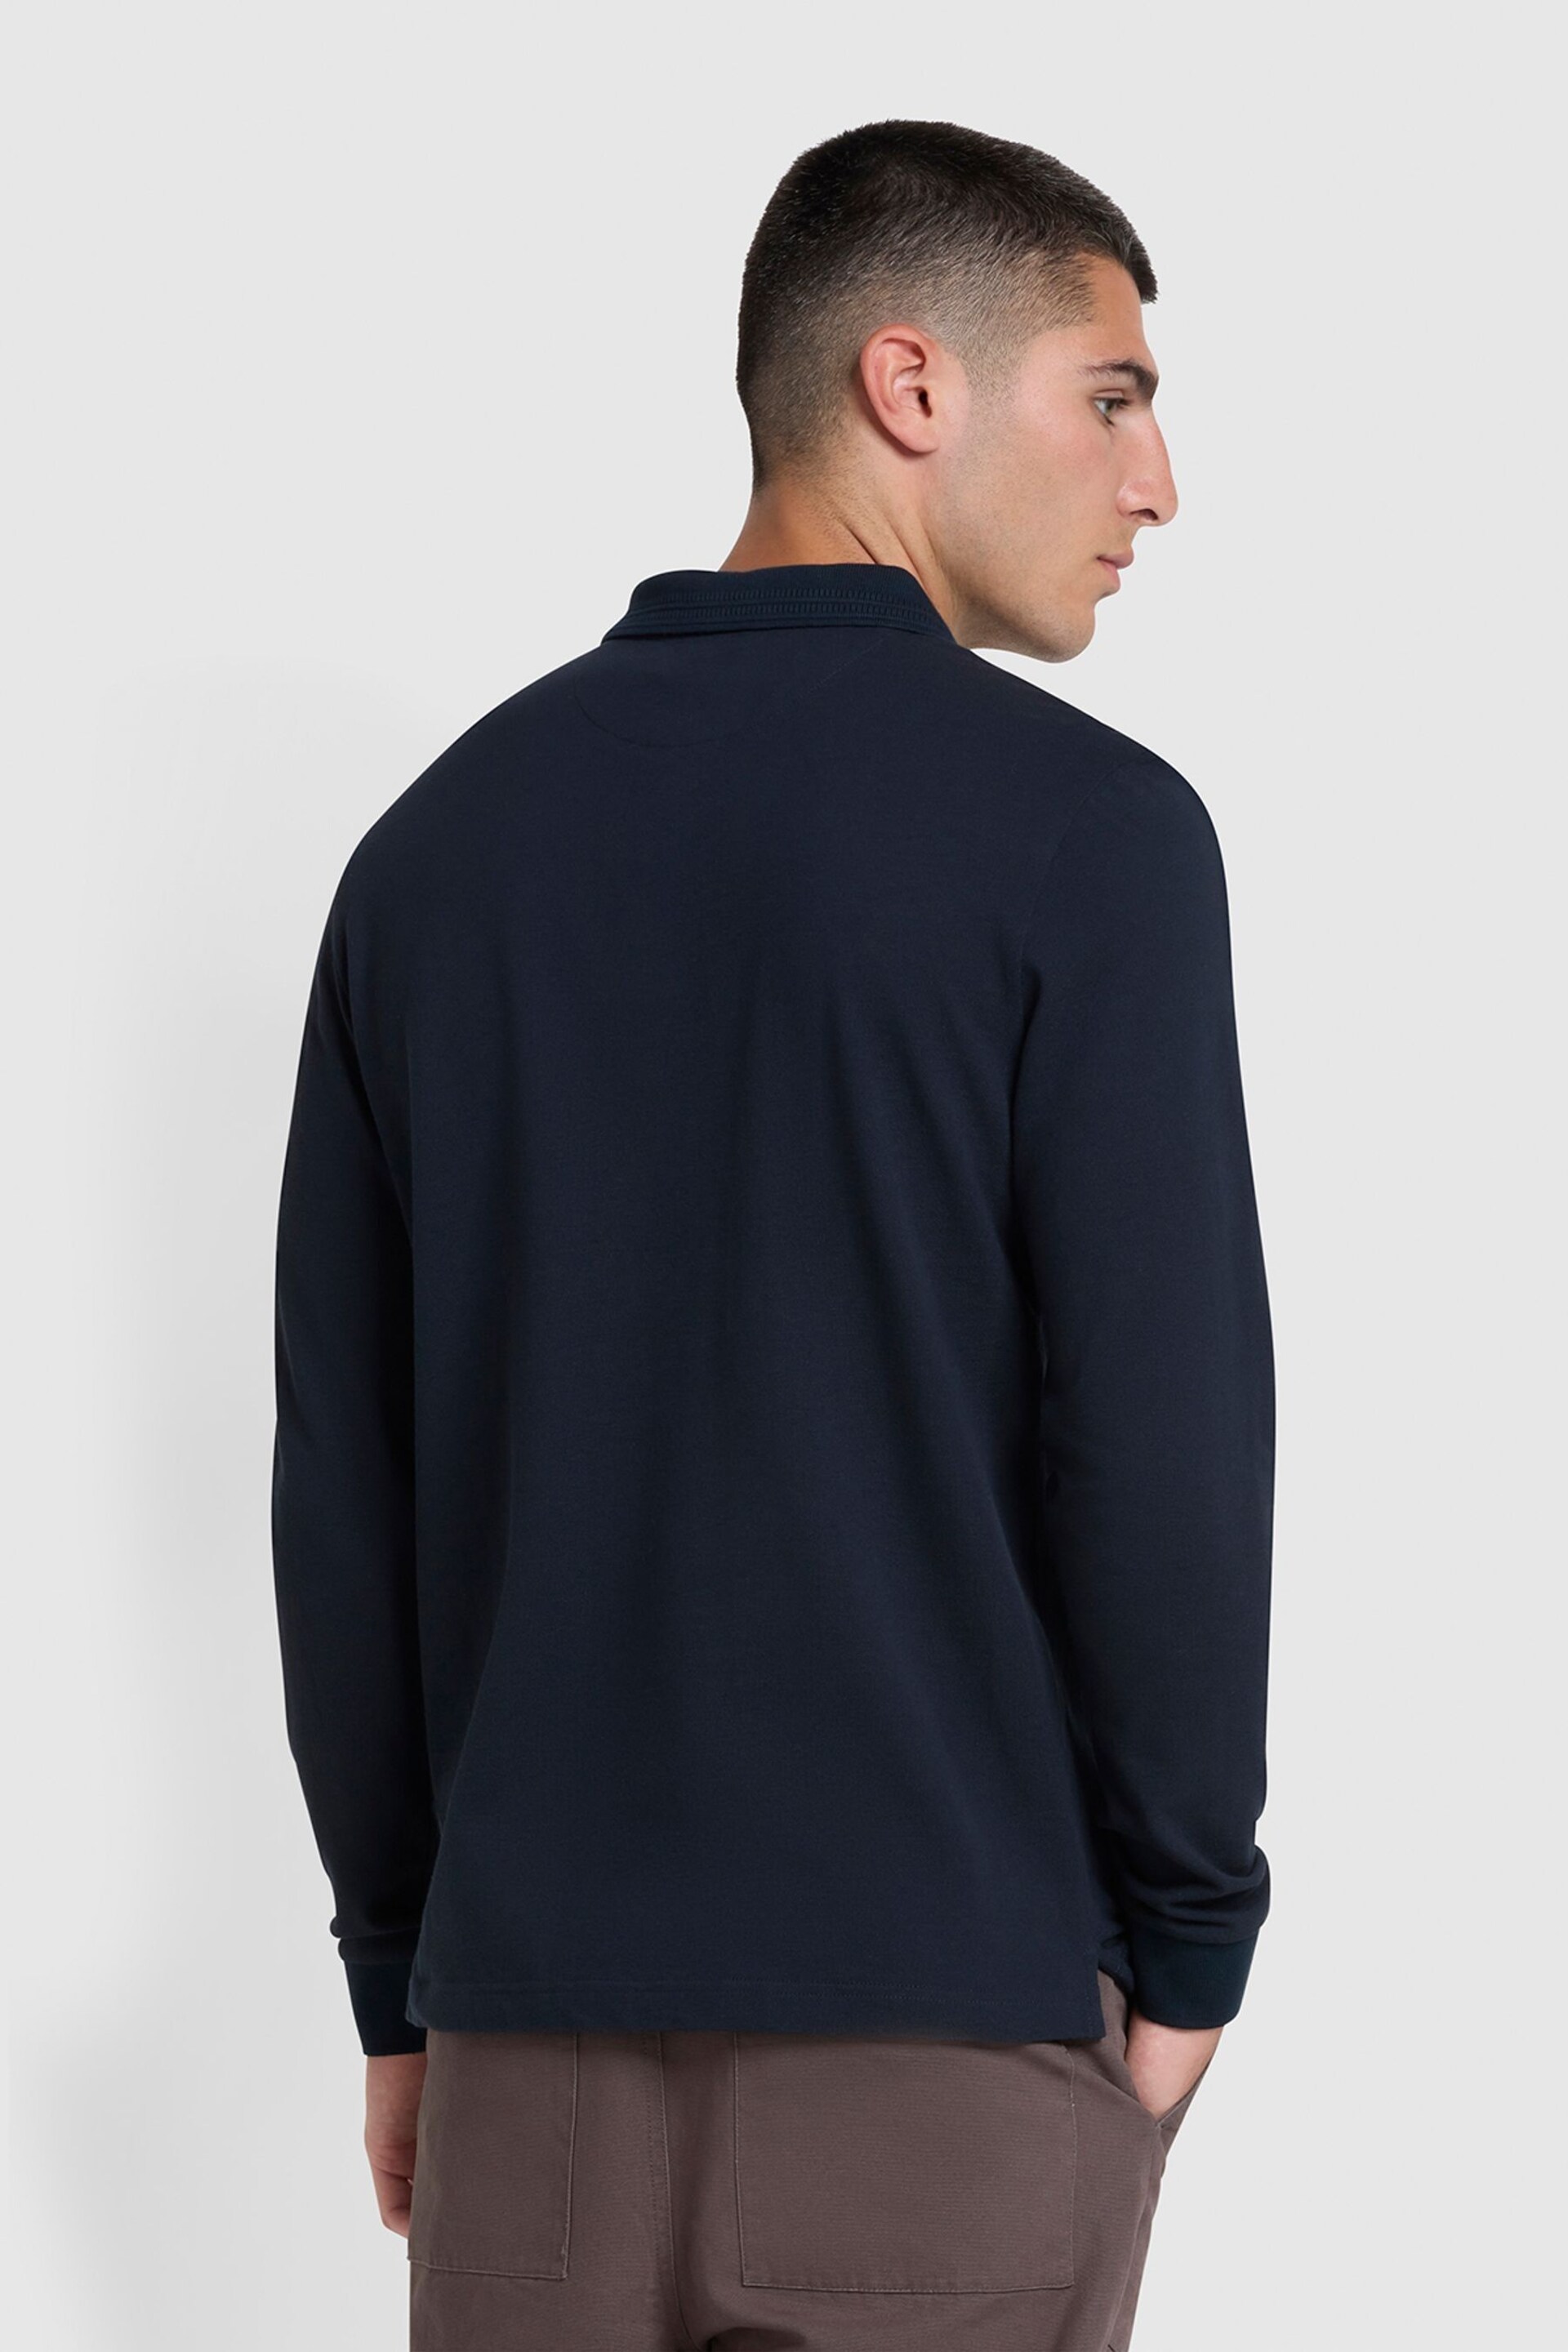 Farah Blue Drexler Long Sleeve Polo  Shirt - Image 2 of 5